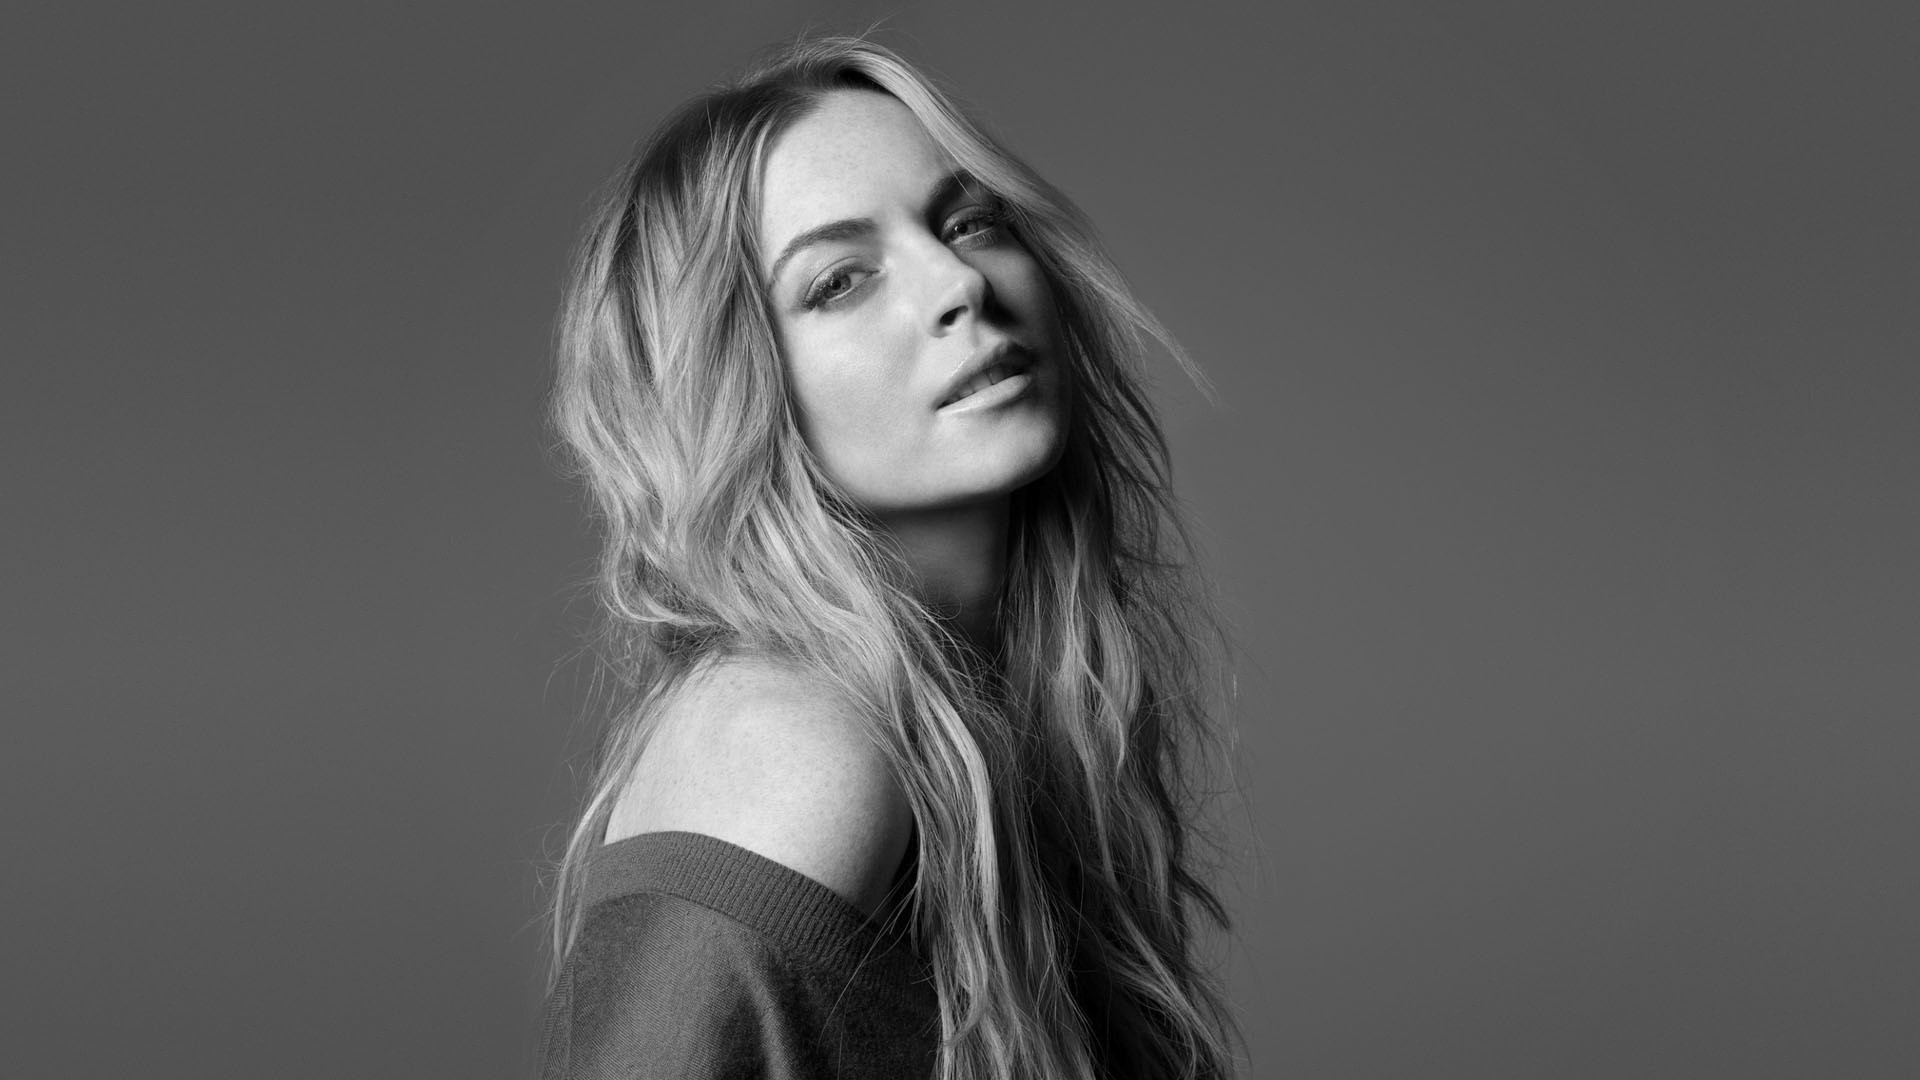 Lindsay Lohan Wallpaper HD Collection For